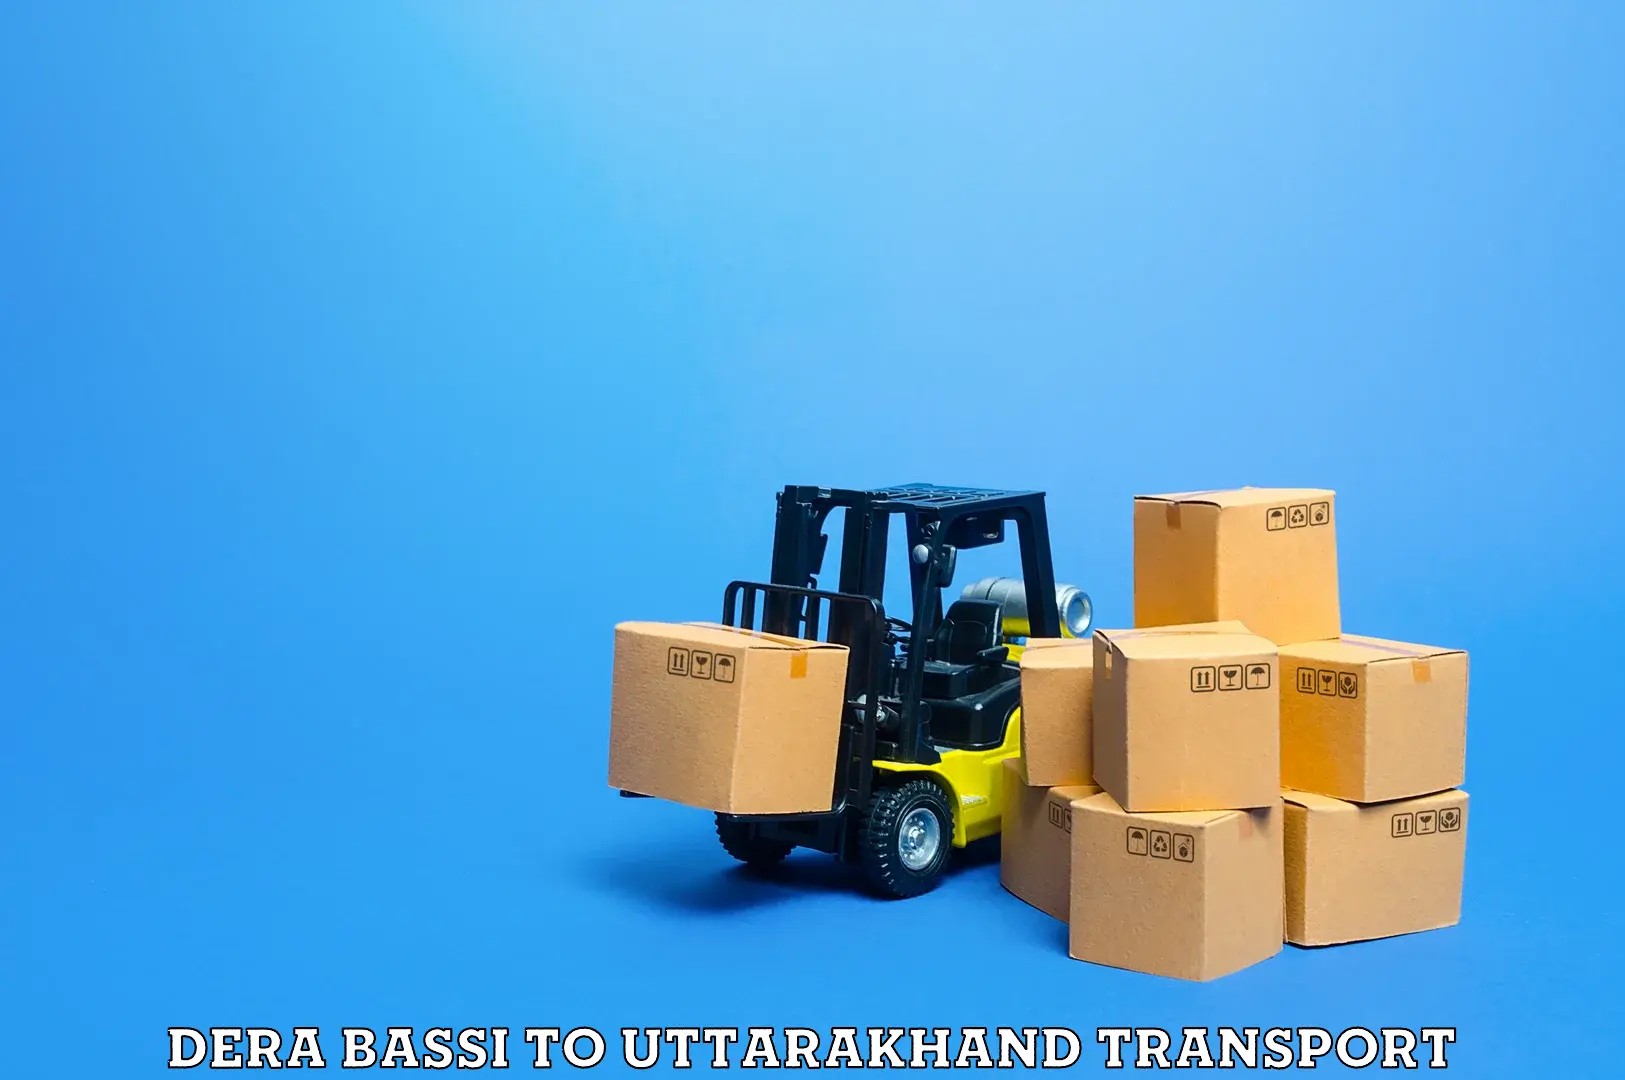 Transport in sharing Dera Bassi to Pithoragarh